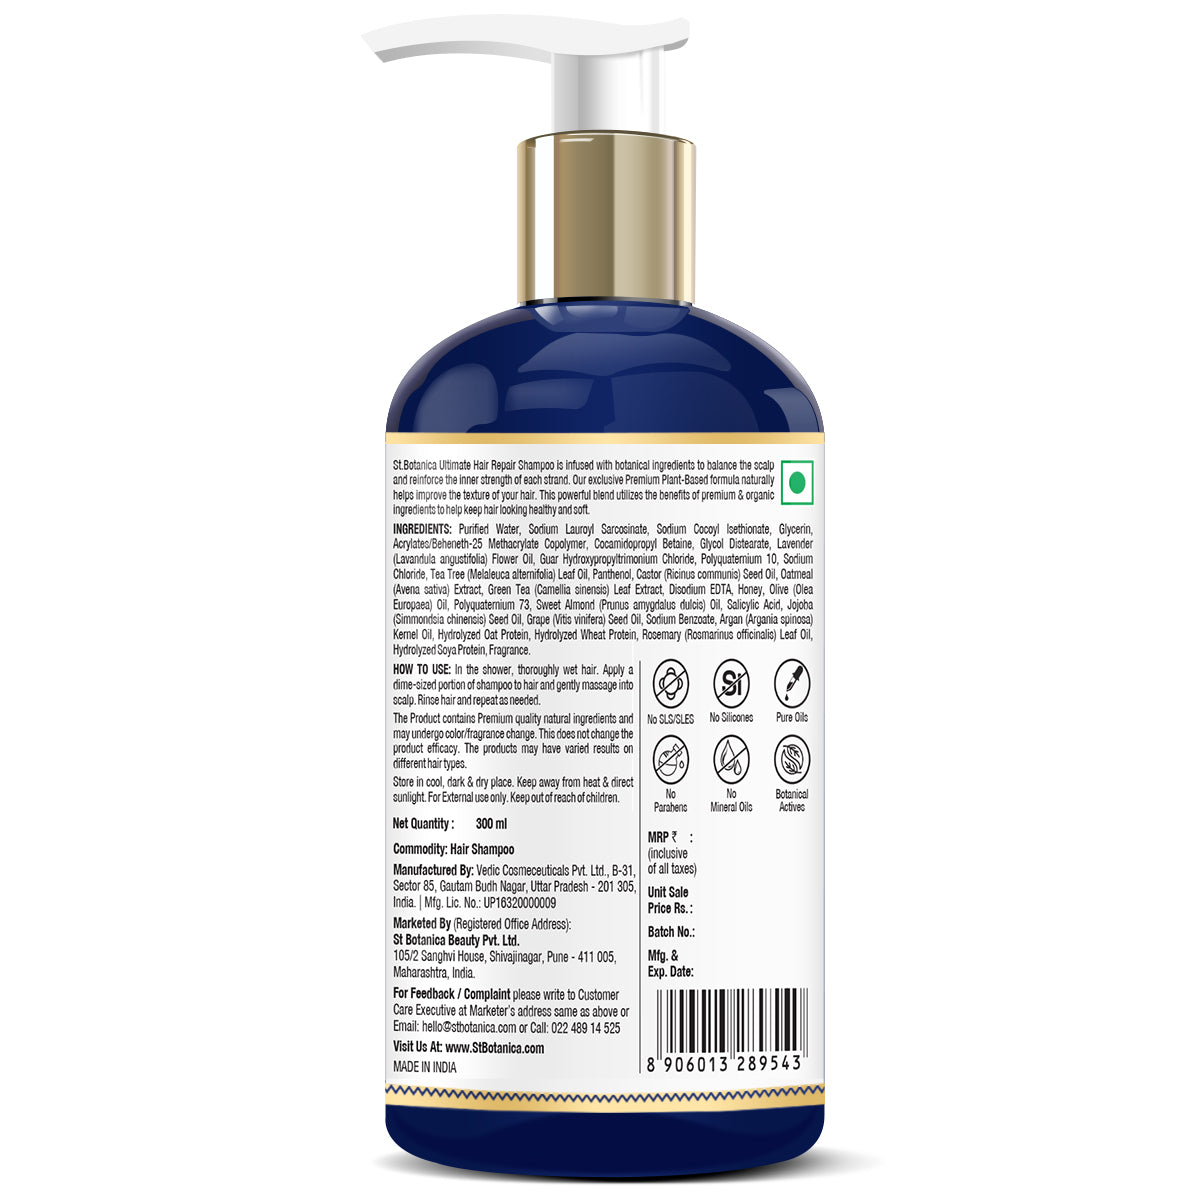 St.Botanica Ultimate Hair Repair Shampoo, No Sls/Sulphate, Paraben or Silicon - With Vitamin B3, B5, Organic Argan Oil, Almond Oil, Saw Palmetto, Coconut Oil, 300 ml